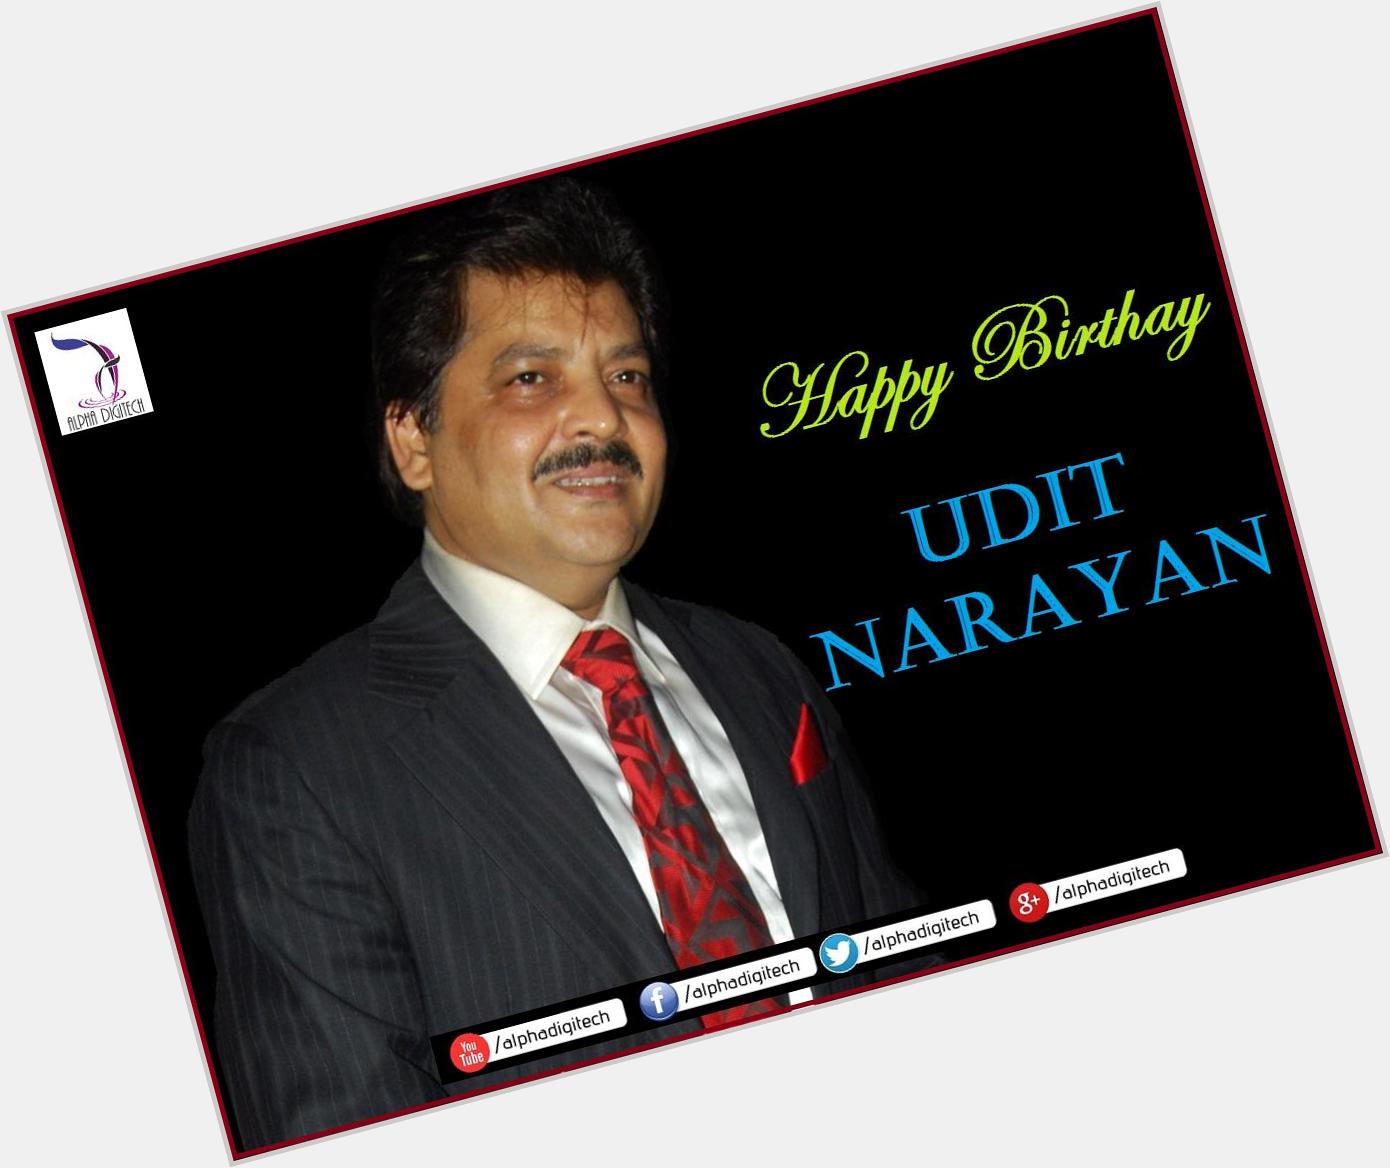 Wishing the King of Romantic Songs Udit Narayan ji a very Happy Birthday!!!  